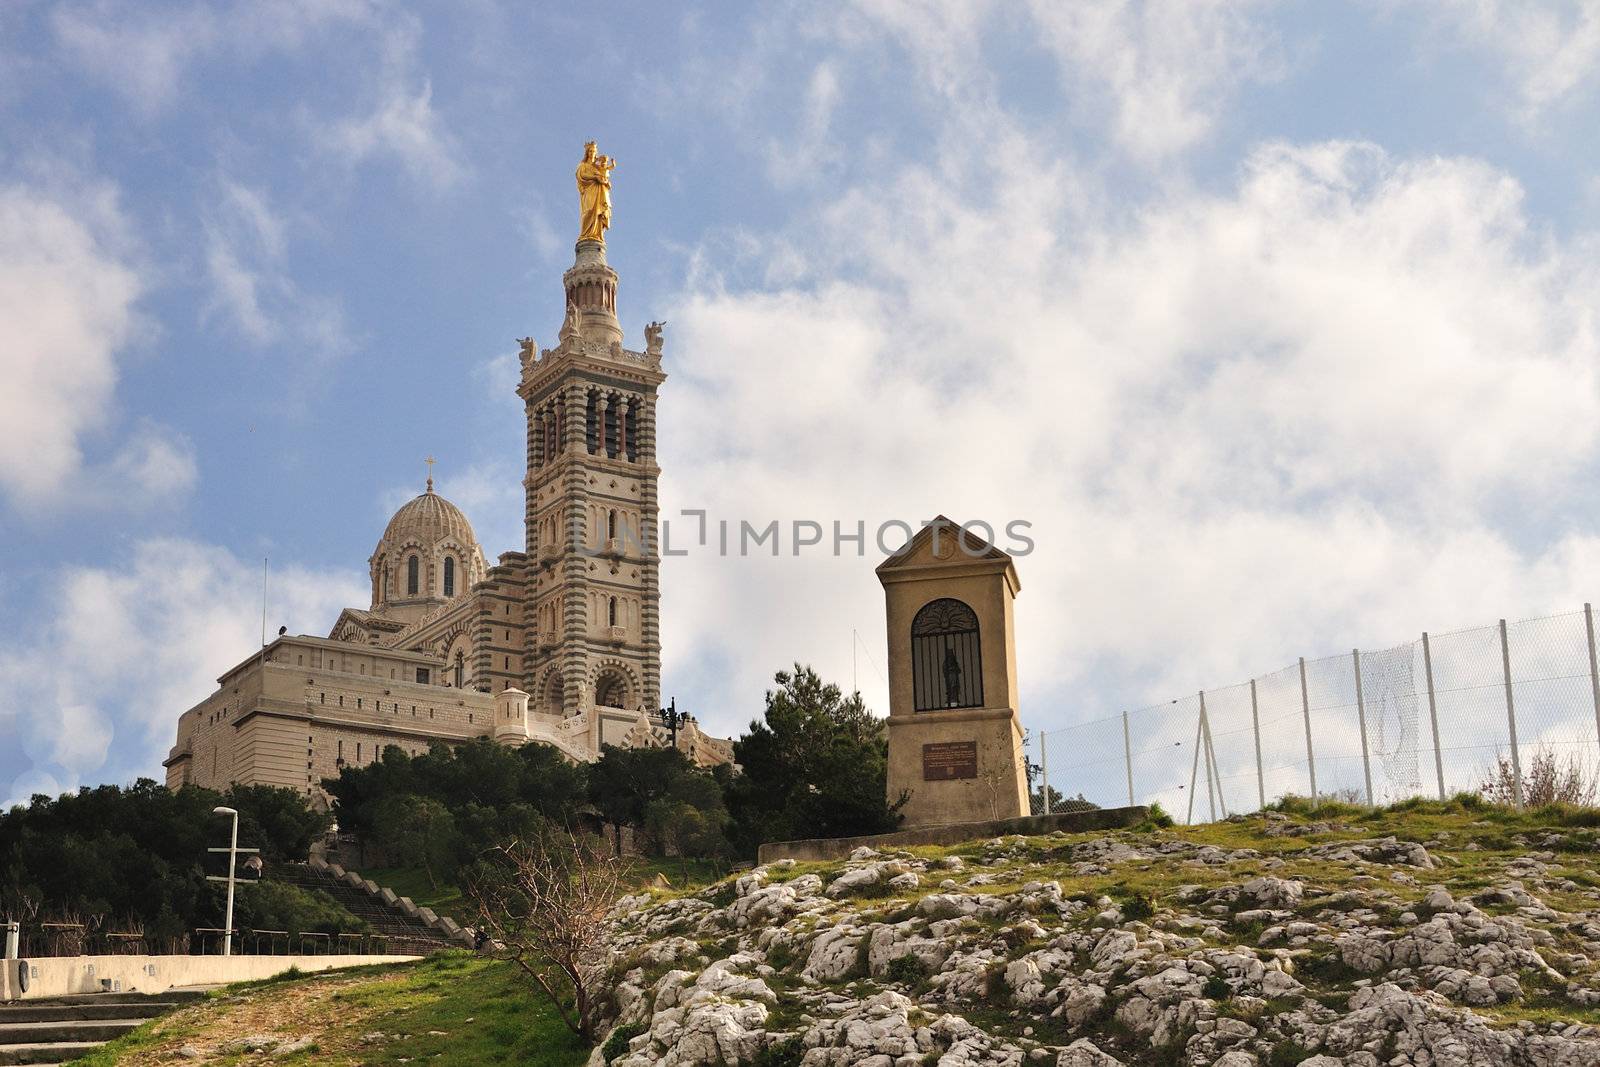 Notre Dame de la Garde, Marseille, Located in French second largest city, Marseille.